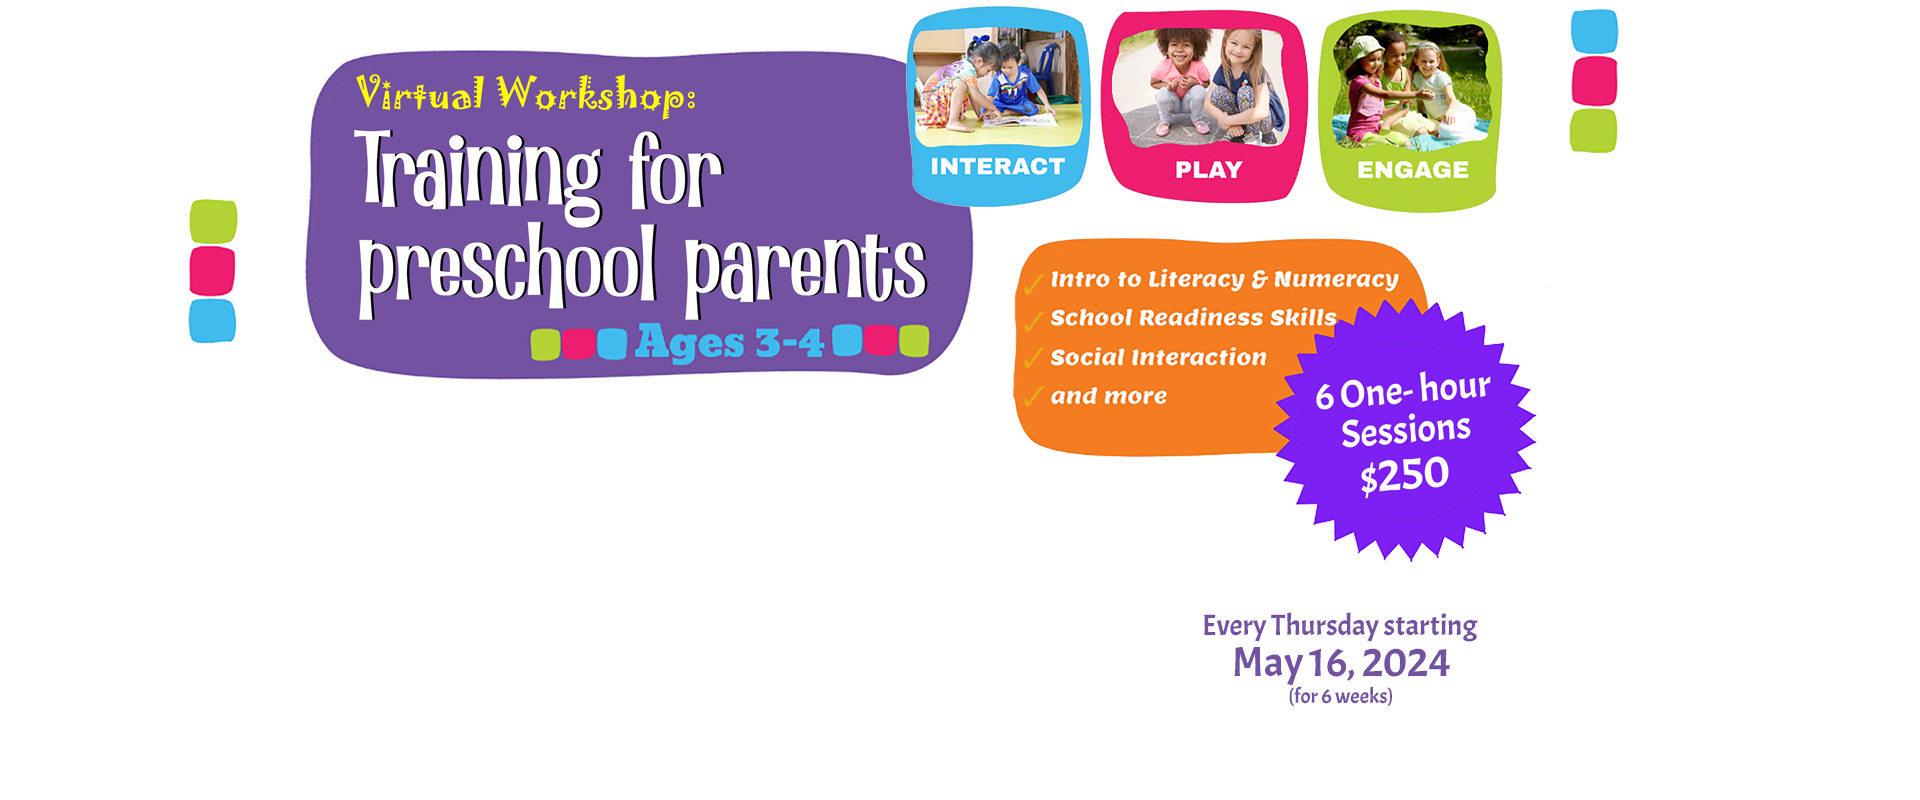 Preschool Parents Virtual Workshop